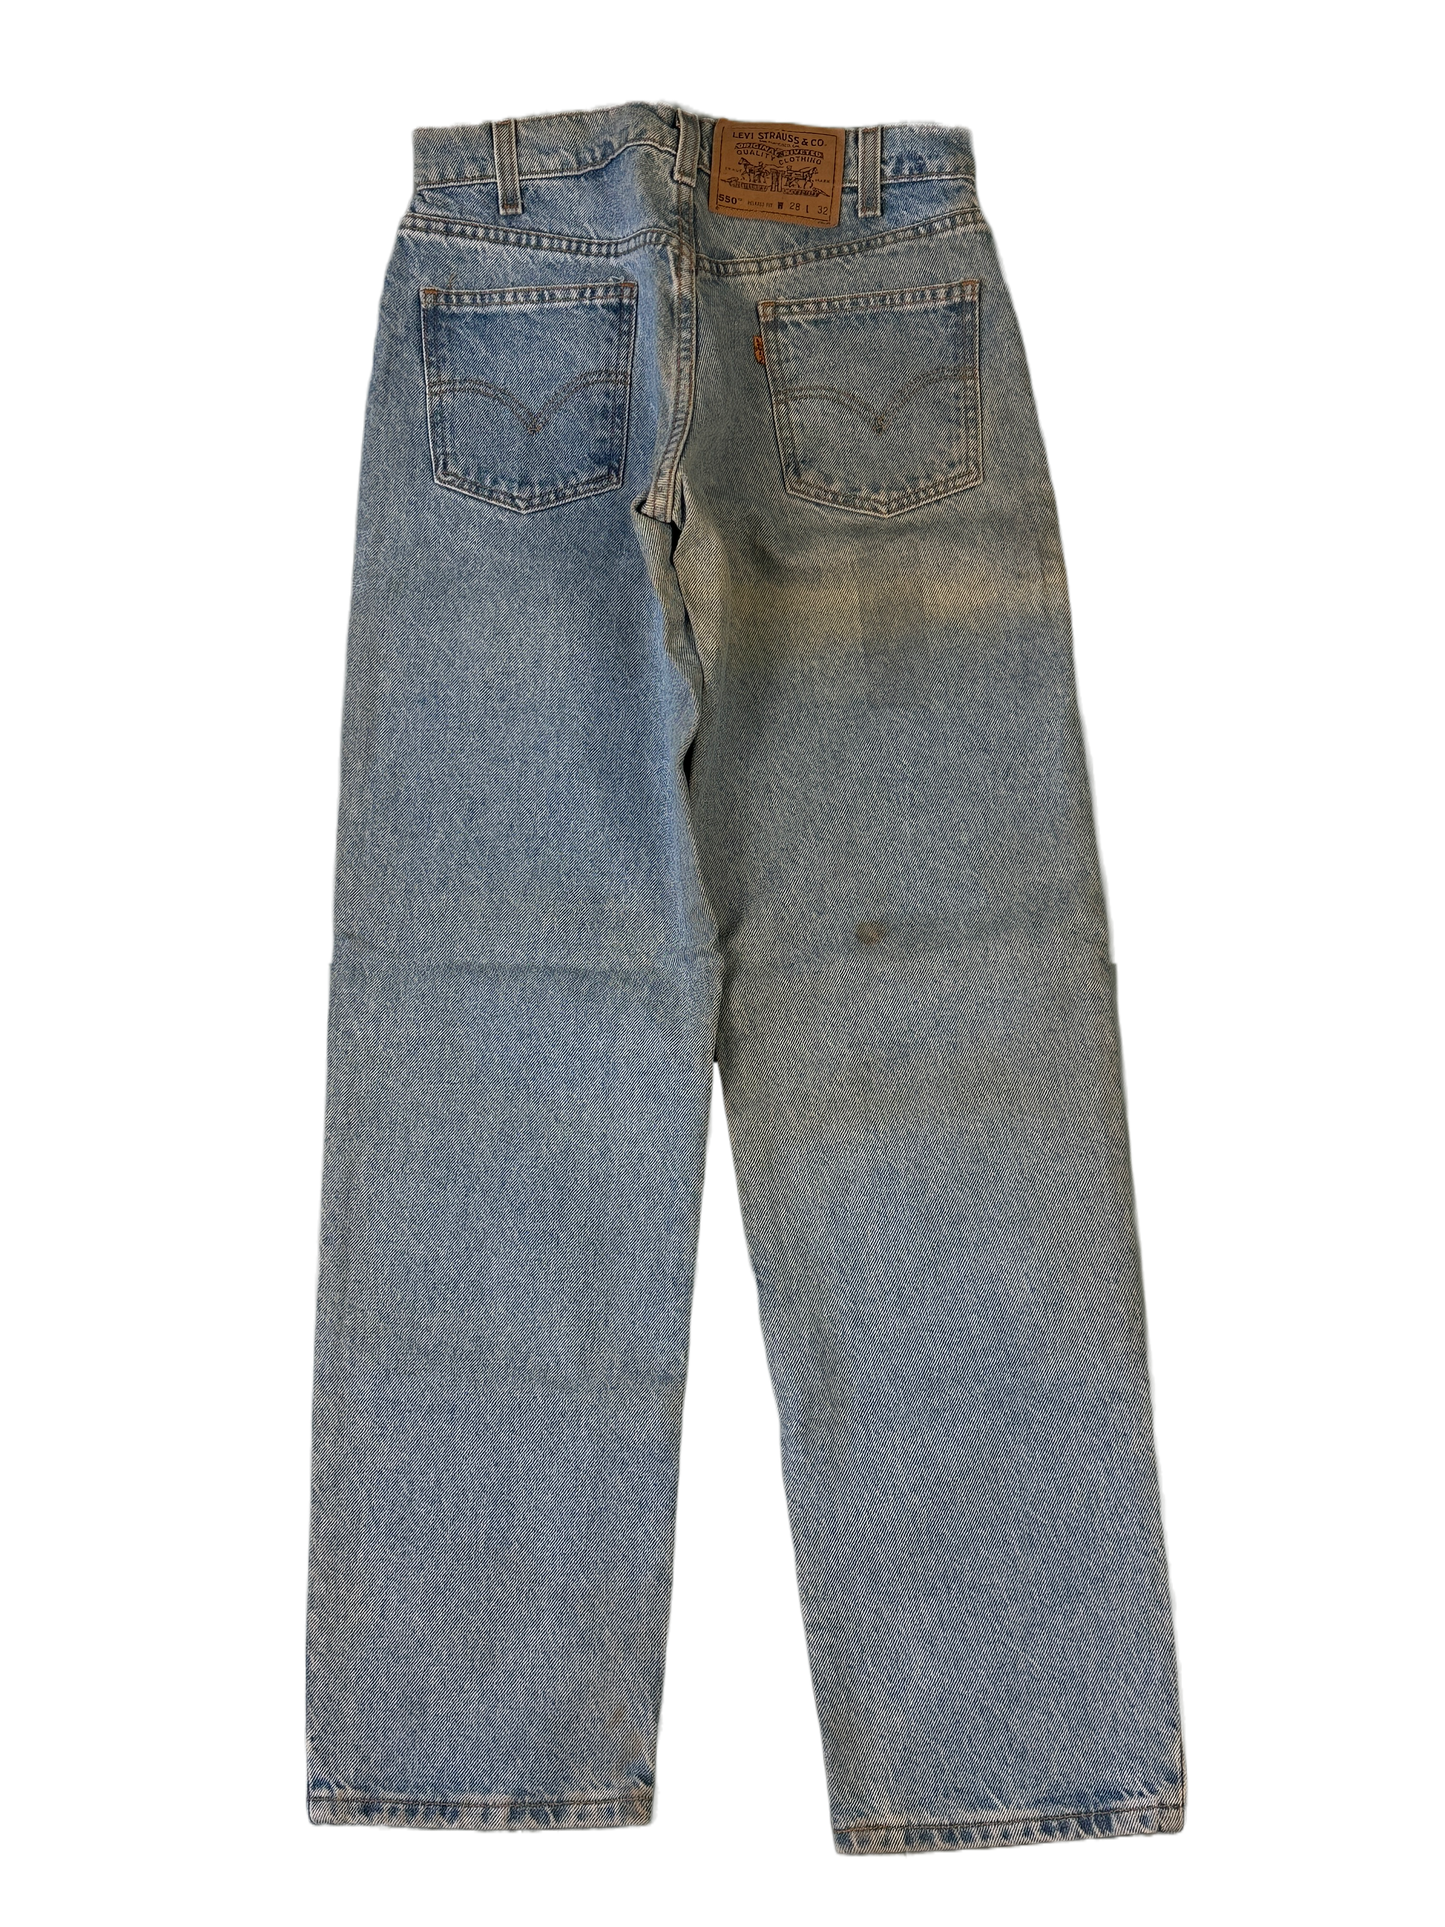 Levis Orange Tab Vintage Jeans - 28 x 32